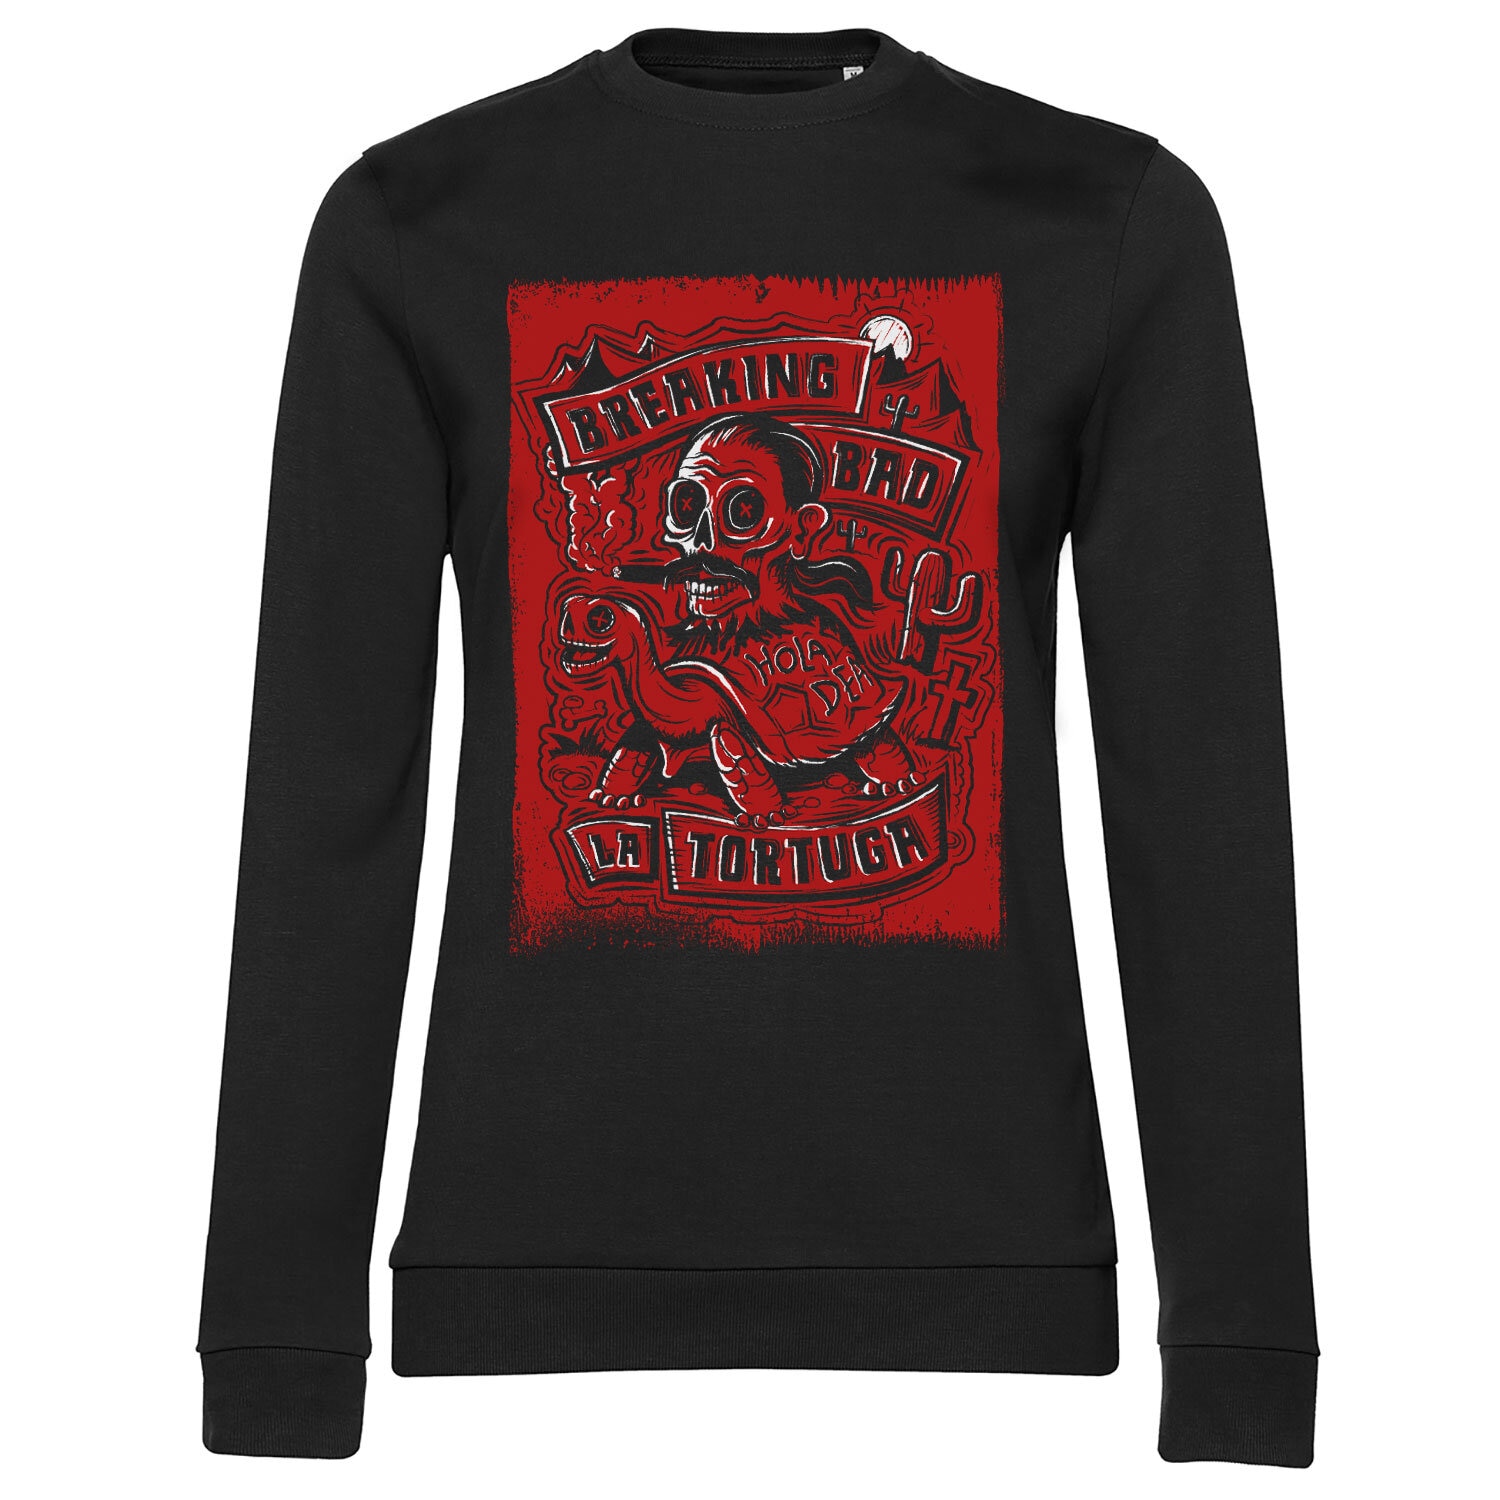 La Tortuga - Hola Death Girly Sweatshirt 